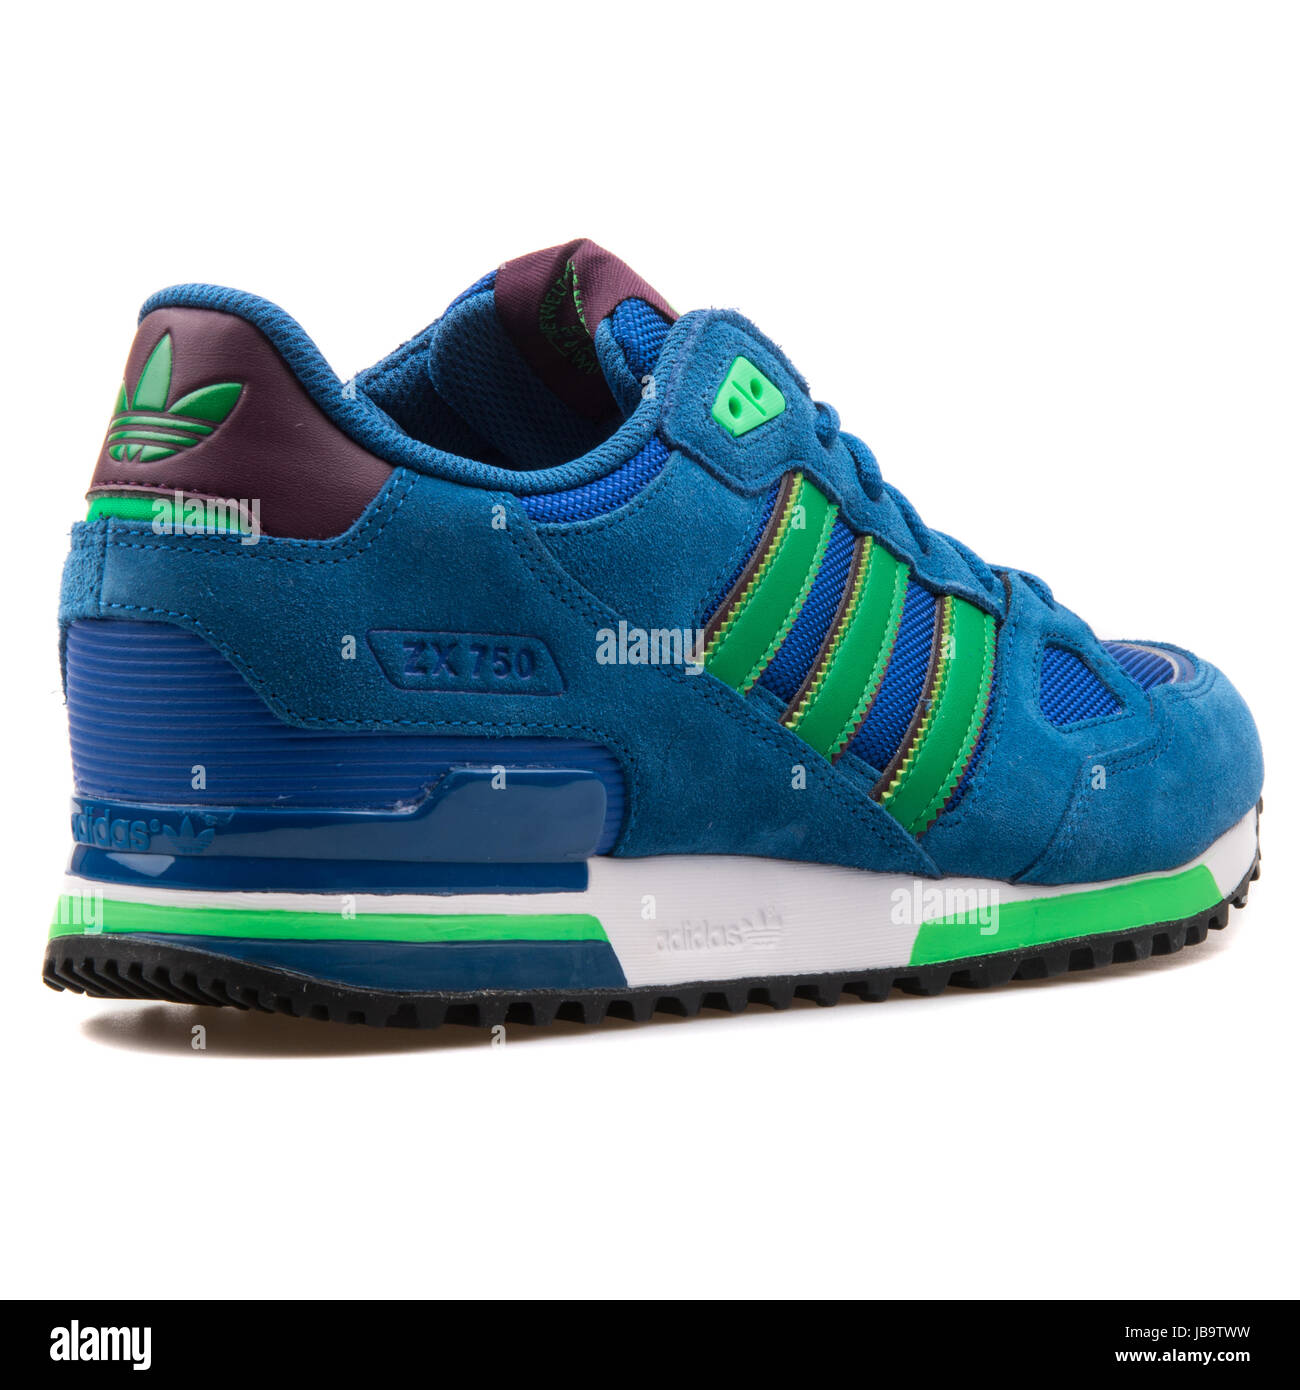 adidas 750 zx blu